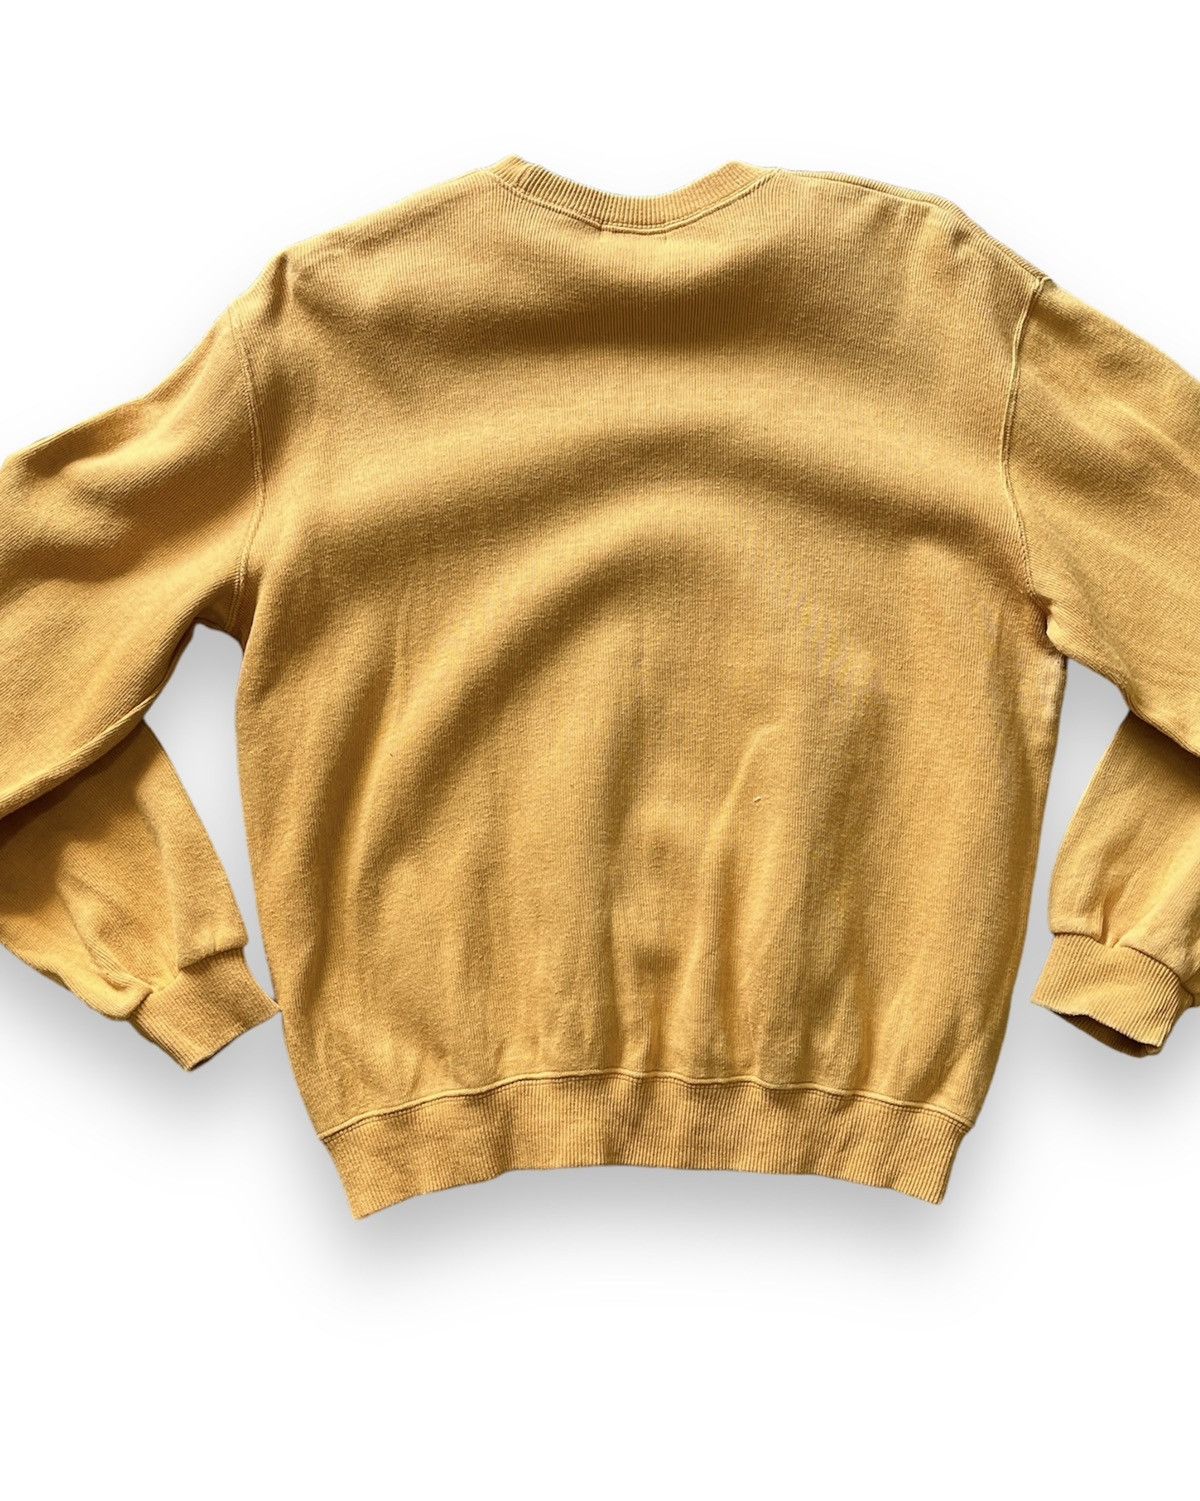 Sun Faded Vintage Yves Saint Laurent Sweater - 2